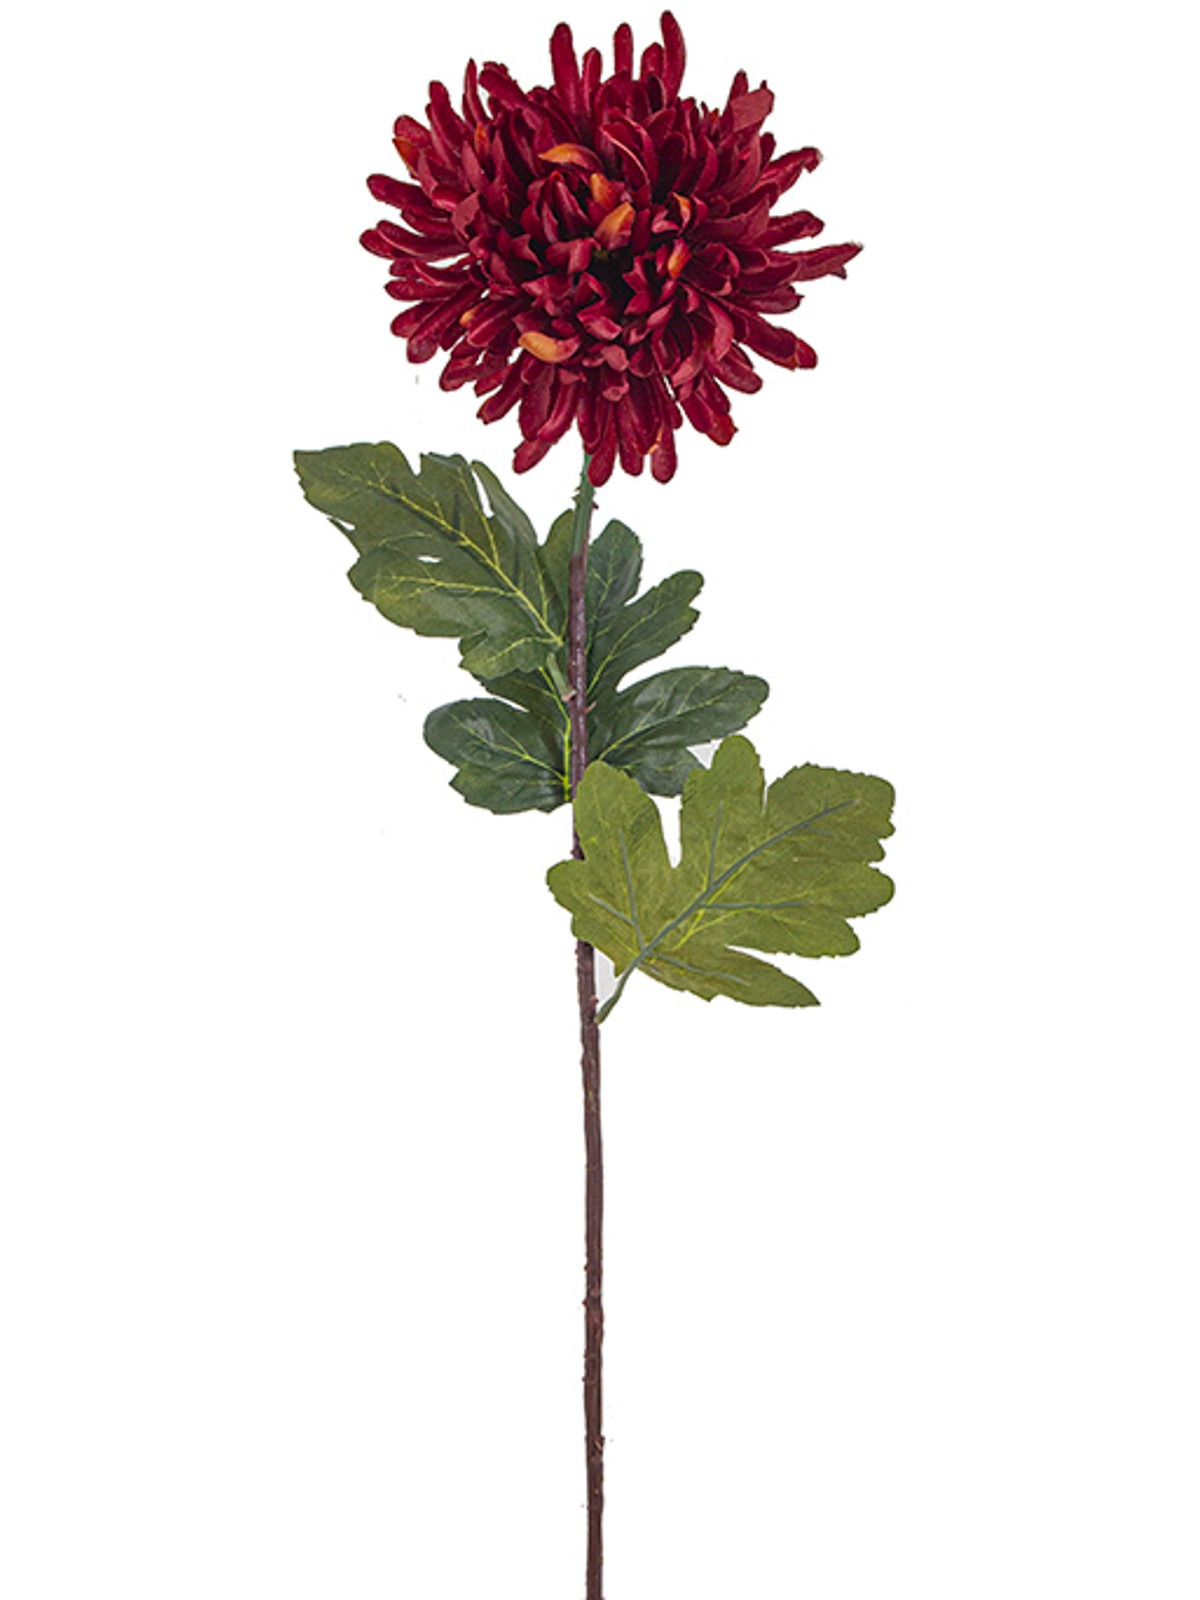 Burgundy chrysanthemum